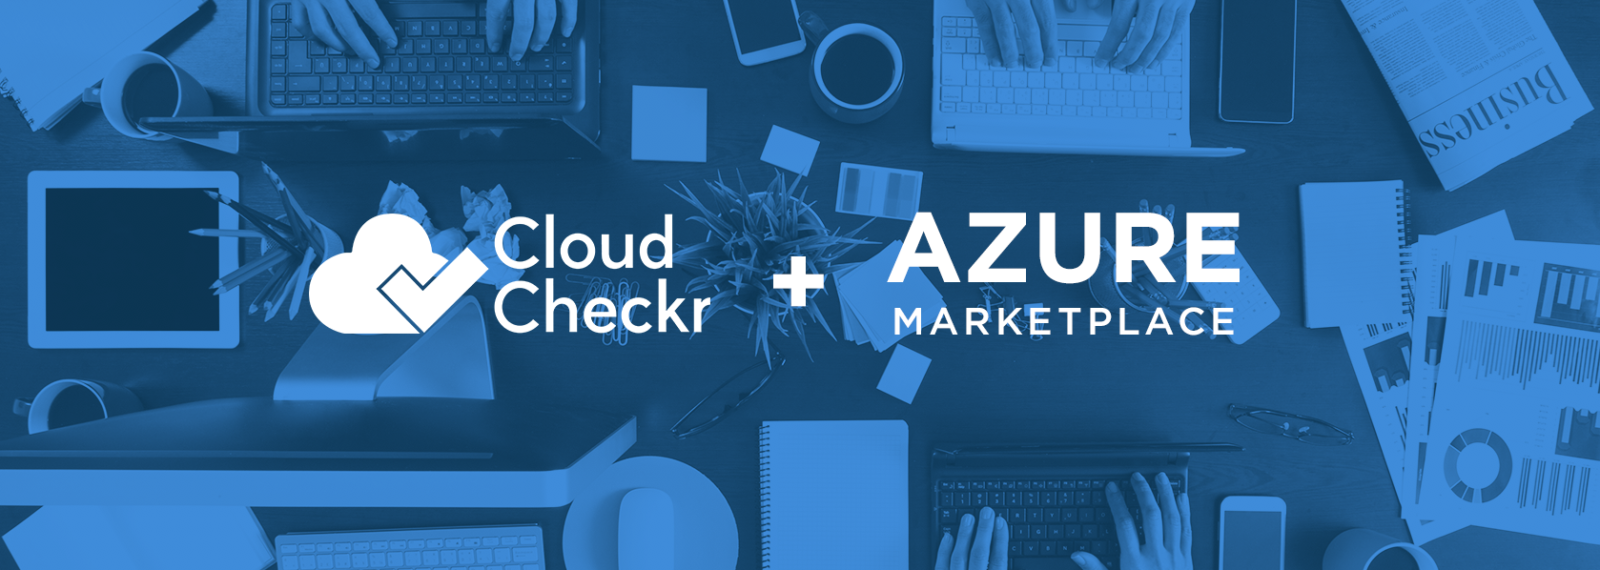 CloudCheckr on Azure Marketplace